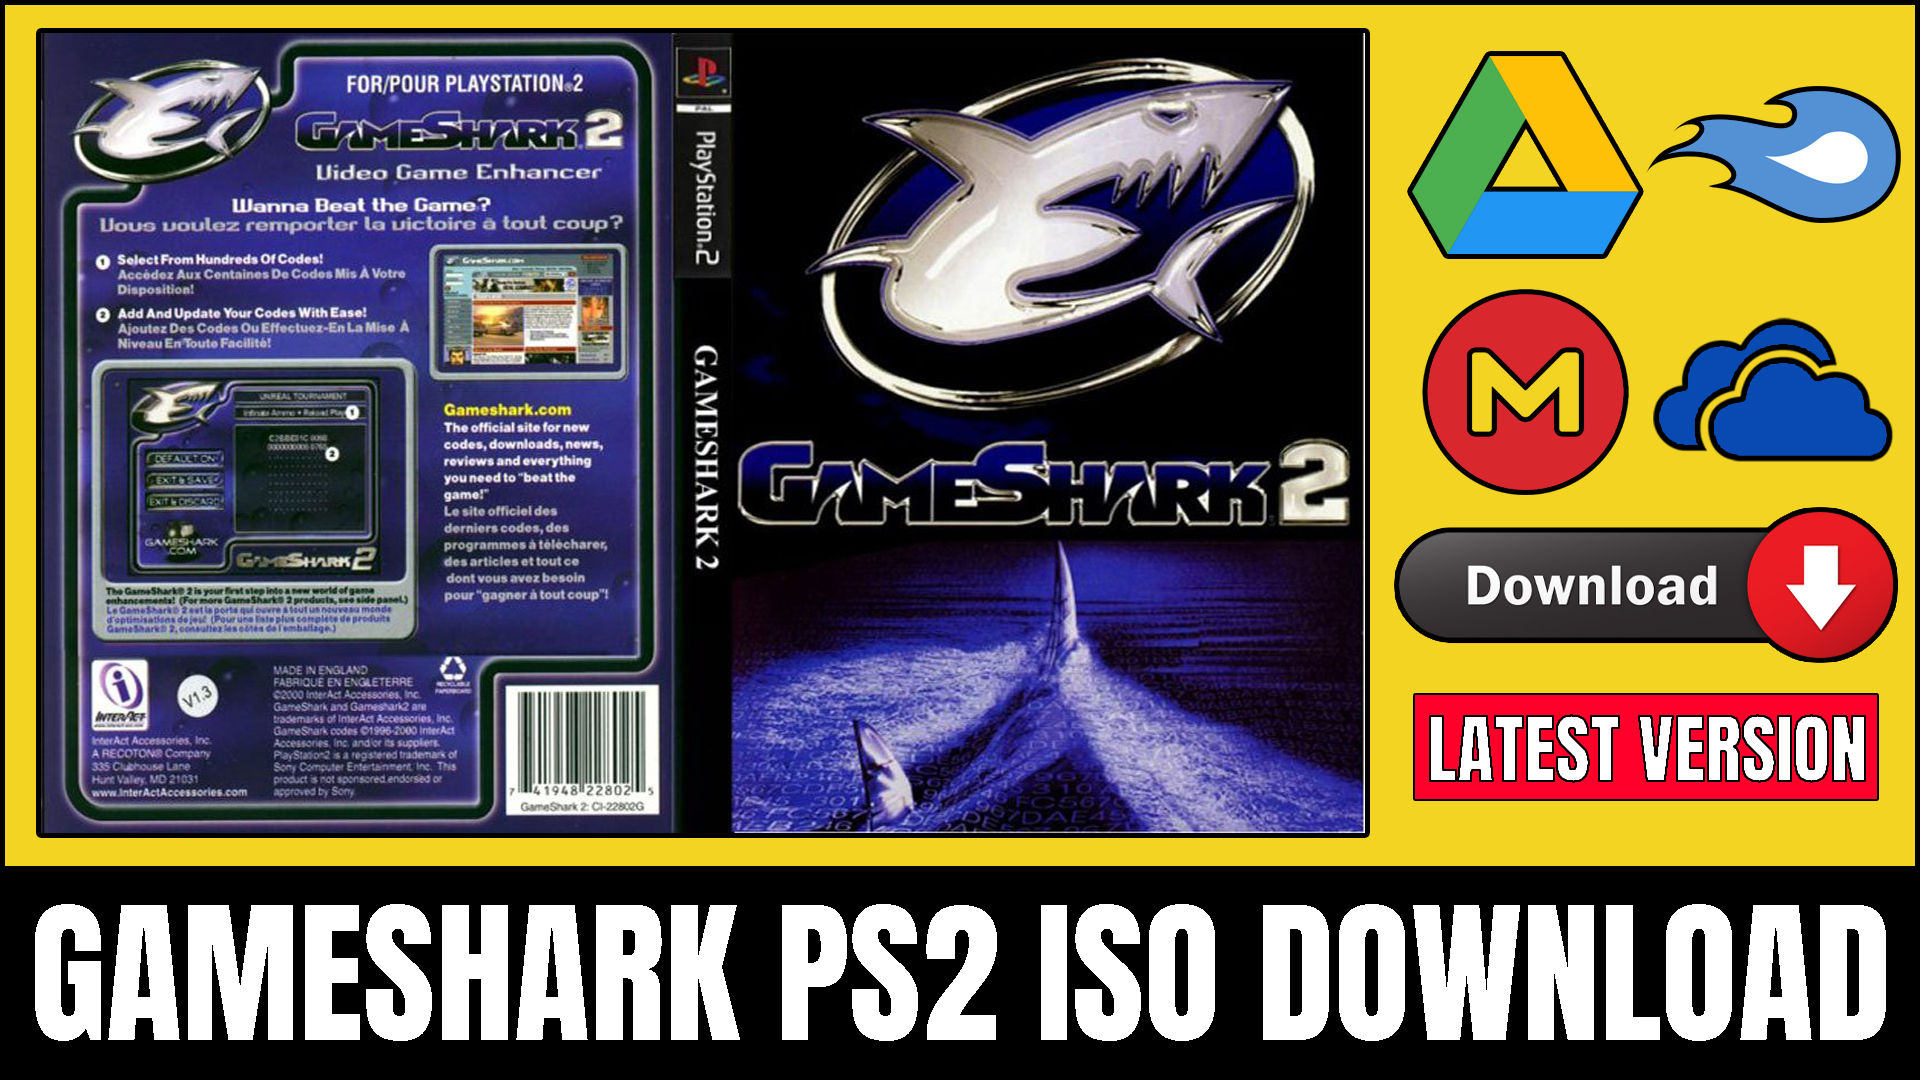 GameShark PS2 ISO Download (Latest Version) - Old ROMs